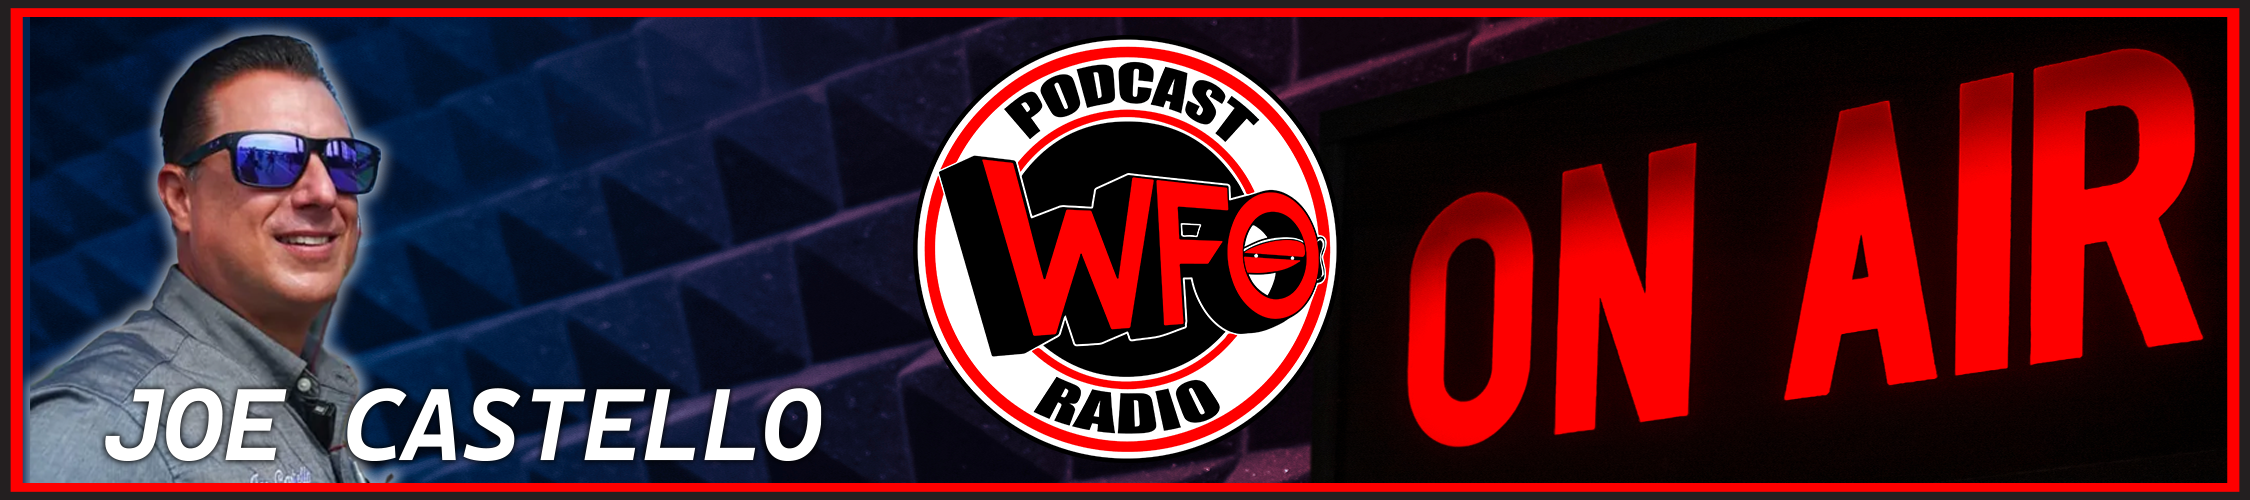 WFO Radio Merch